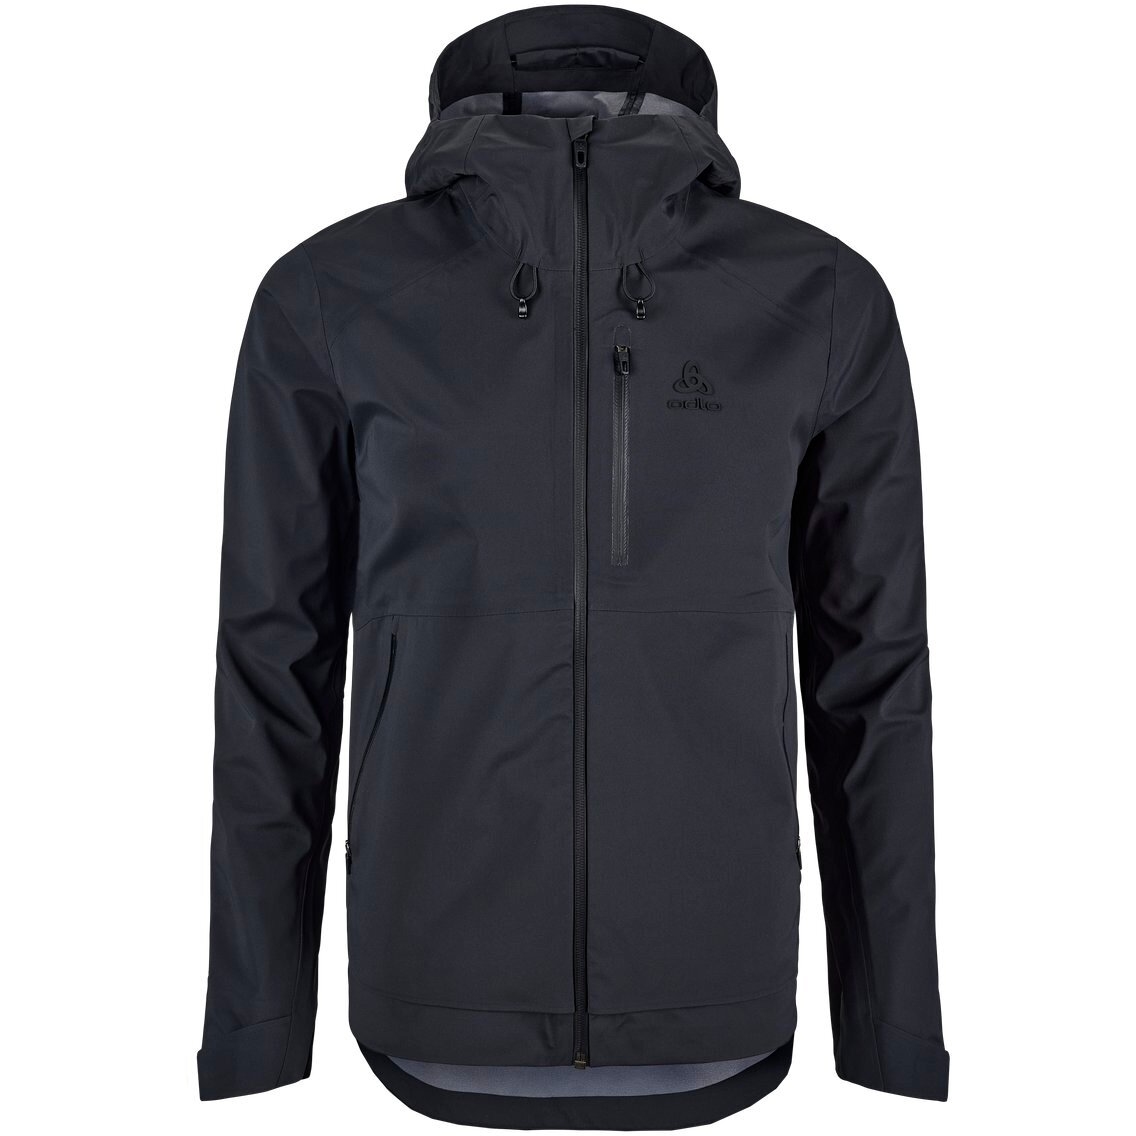 Produktbild von Odlo Ascent 3L Hardshell-Jacke Damen - schwarz